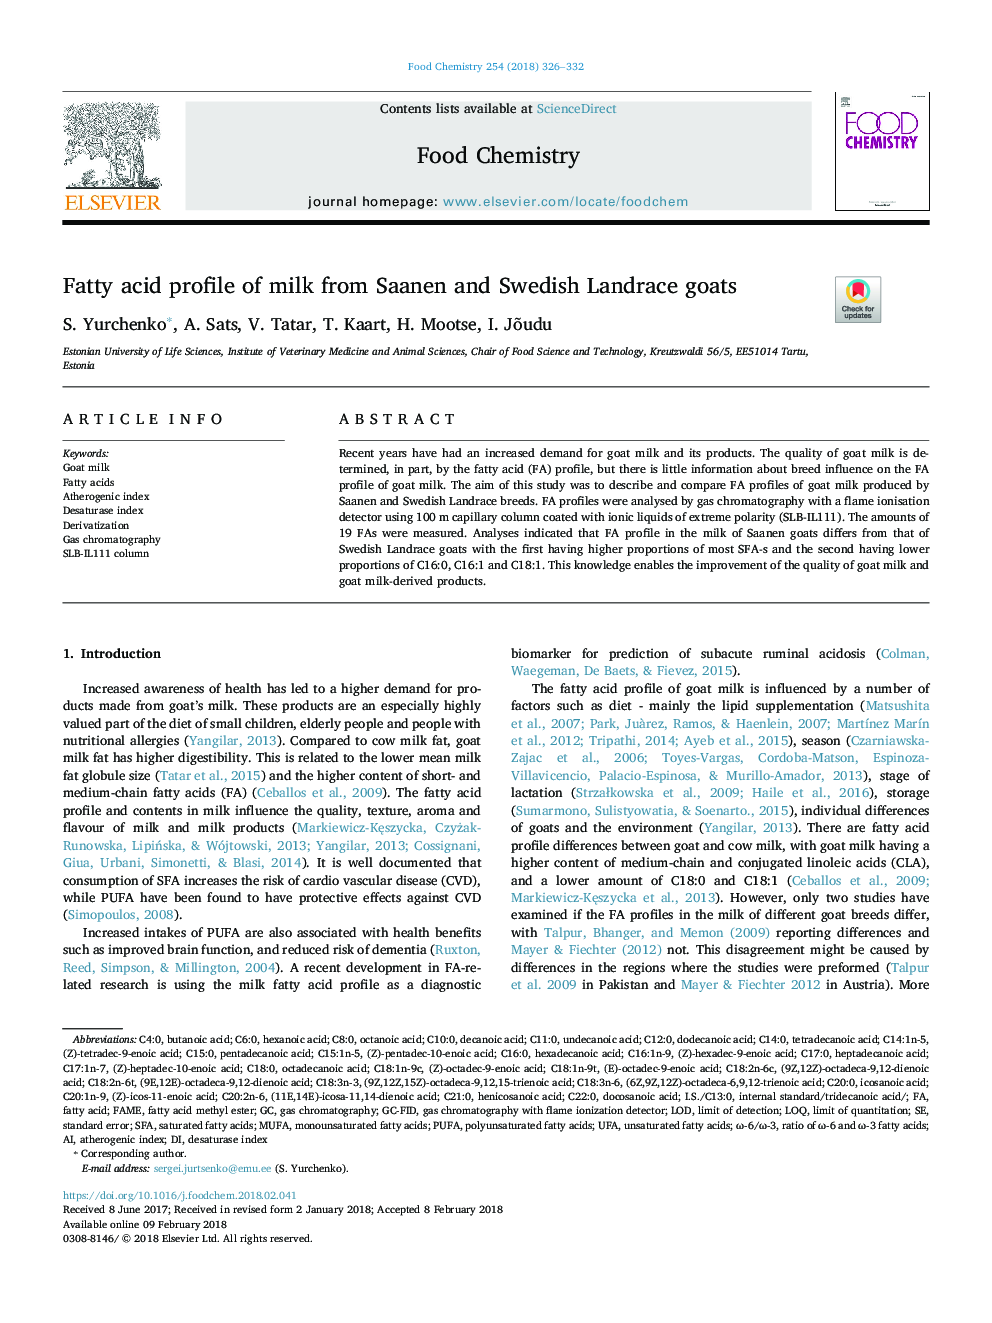 Fatty acid profile of milk from Saanen and Swedish Landrace goats